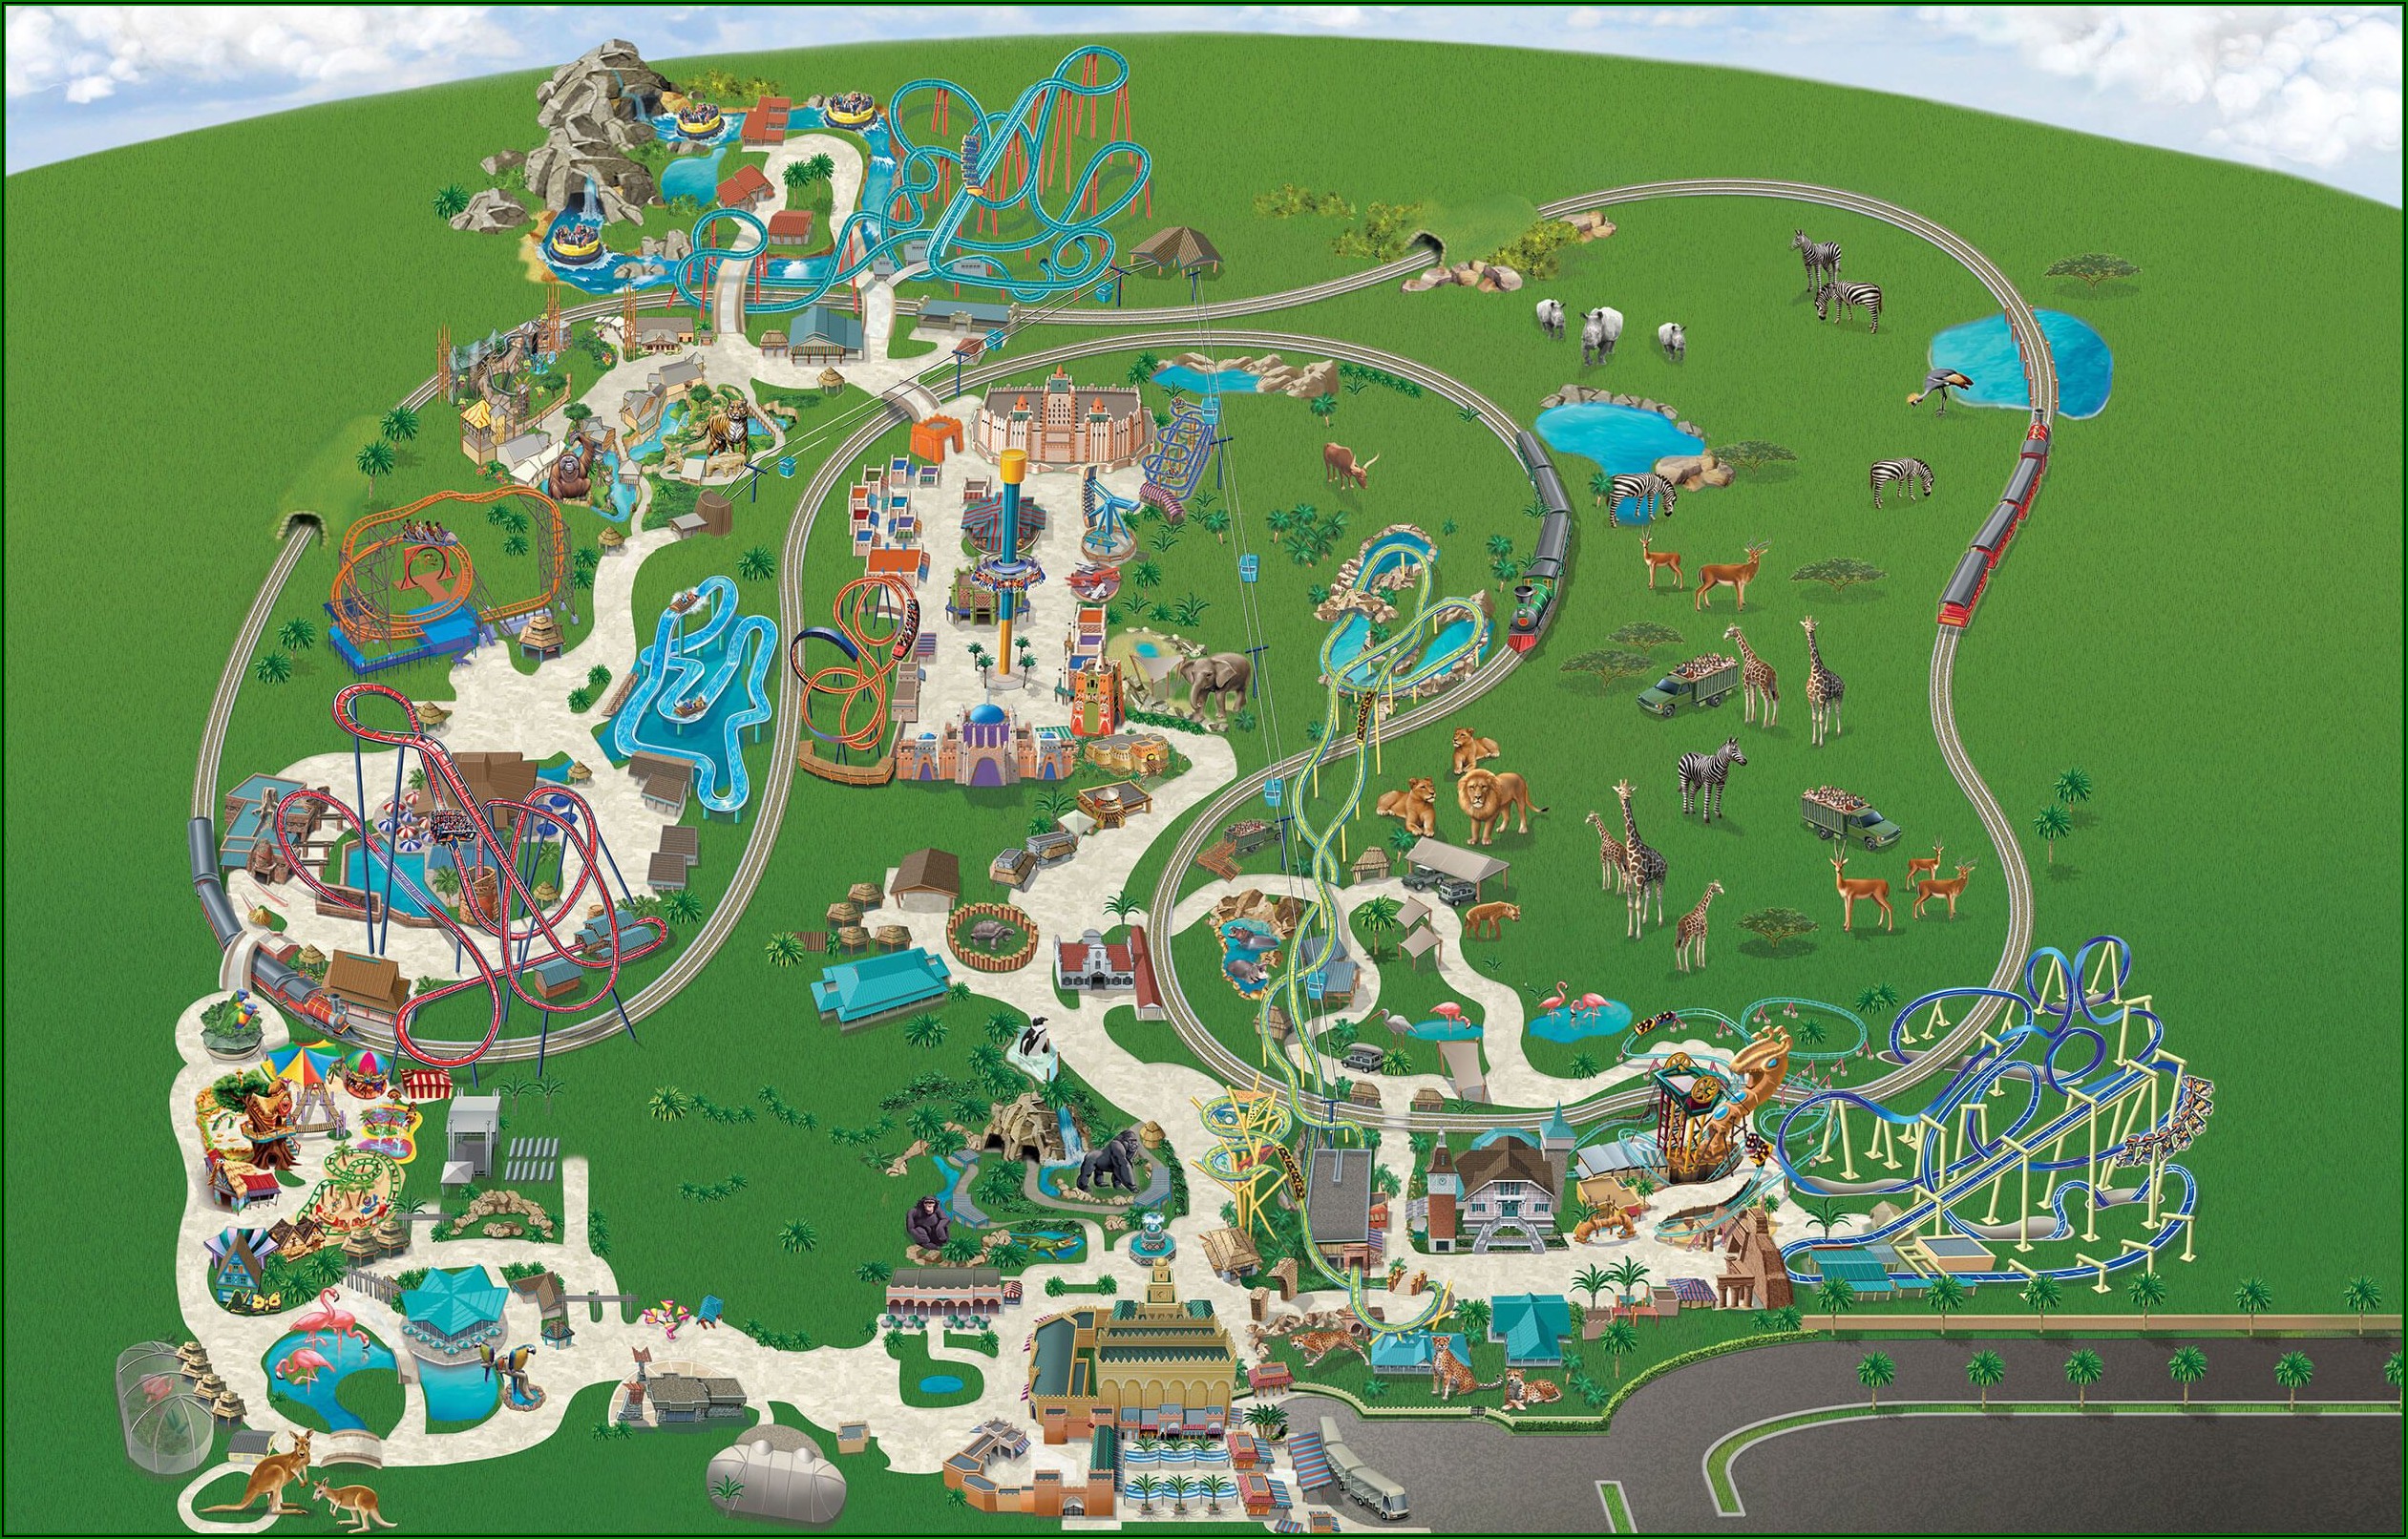 Busch Gardens Tampa Map Of Park